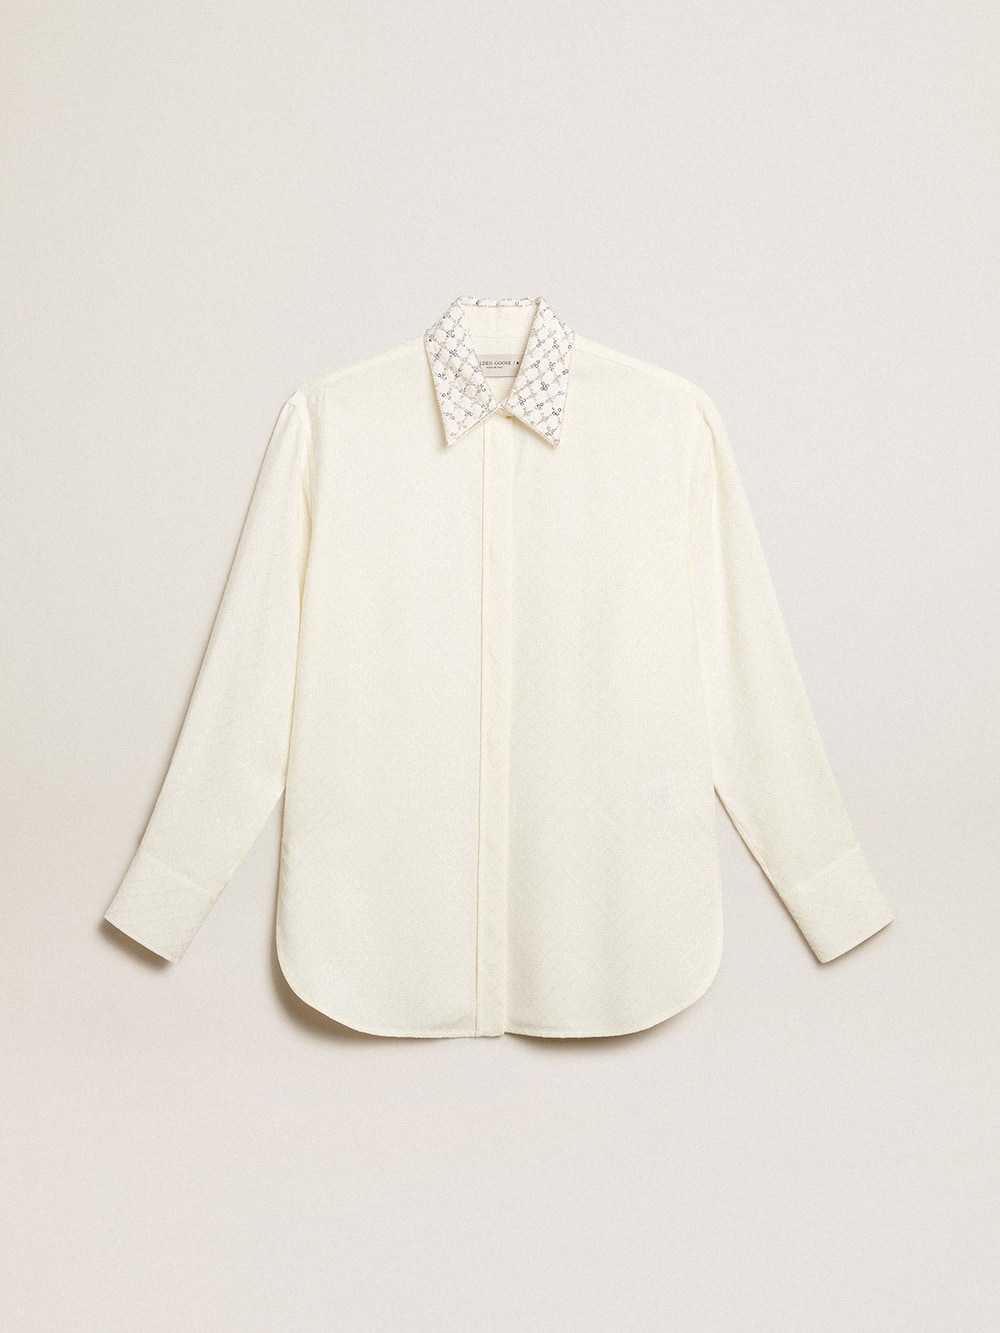 Golden Goose - Camicia color bianco antico con motivo jacquard e ricami in 